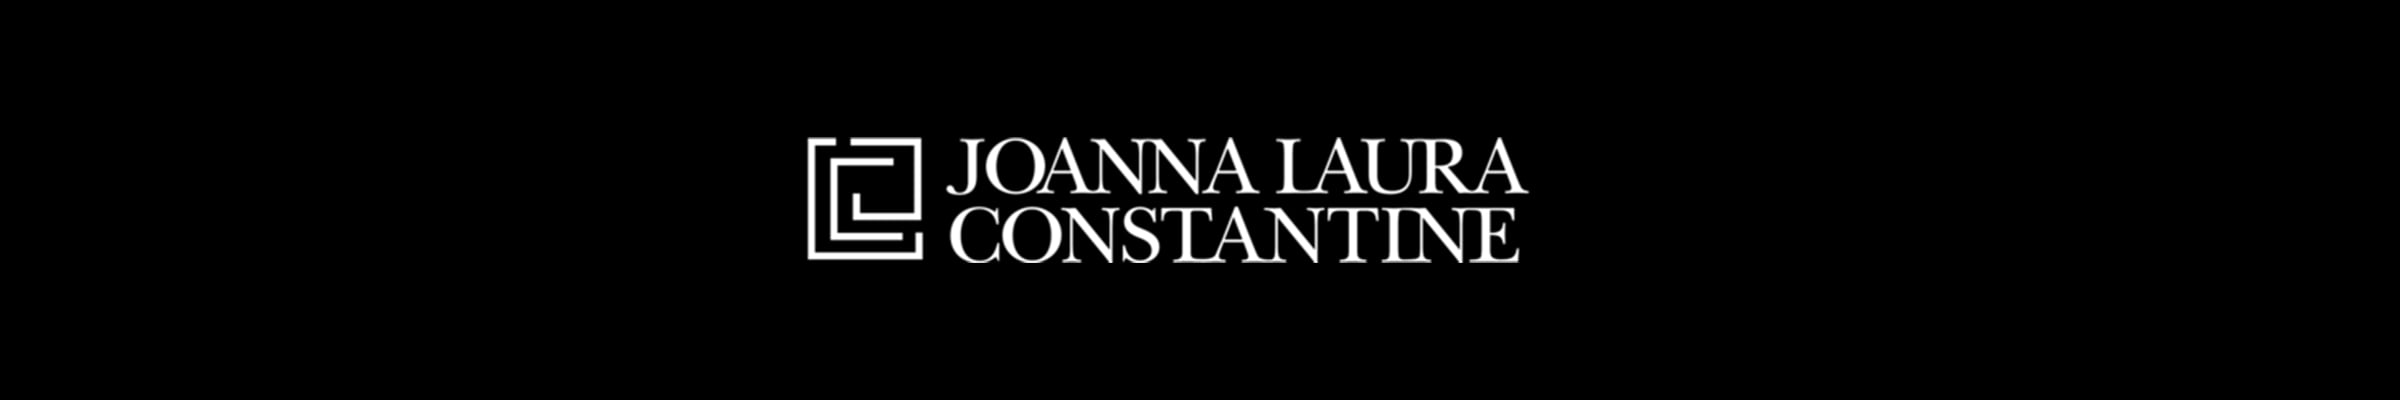 joanna-laura-constantine-banner